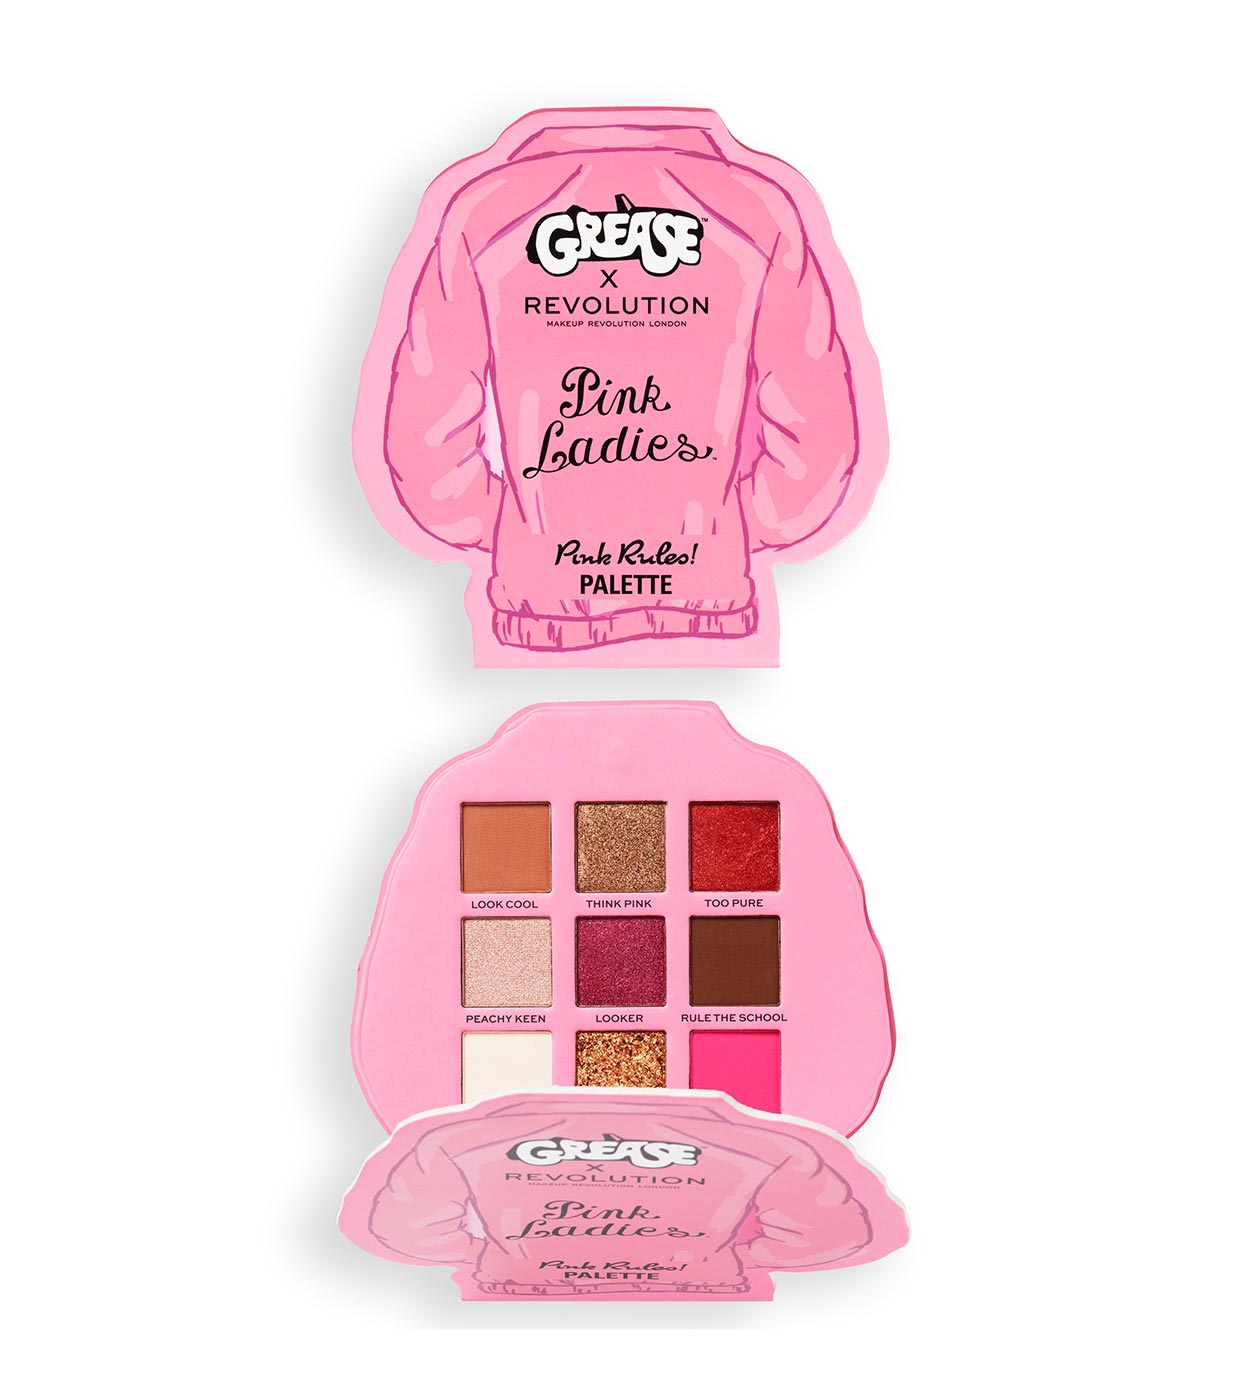 https://www.maquibeauty.pt/images/productos/revolution-grease-x-revolution-paleta-de-sombras-pink-ladies-1-78505.jpeg